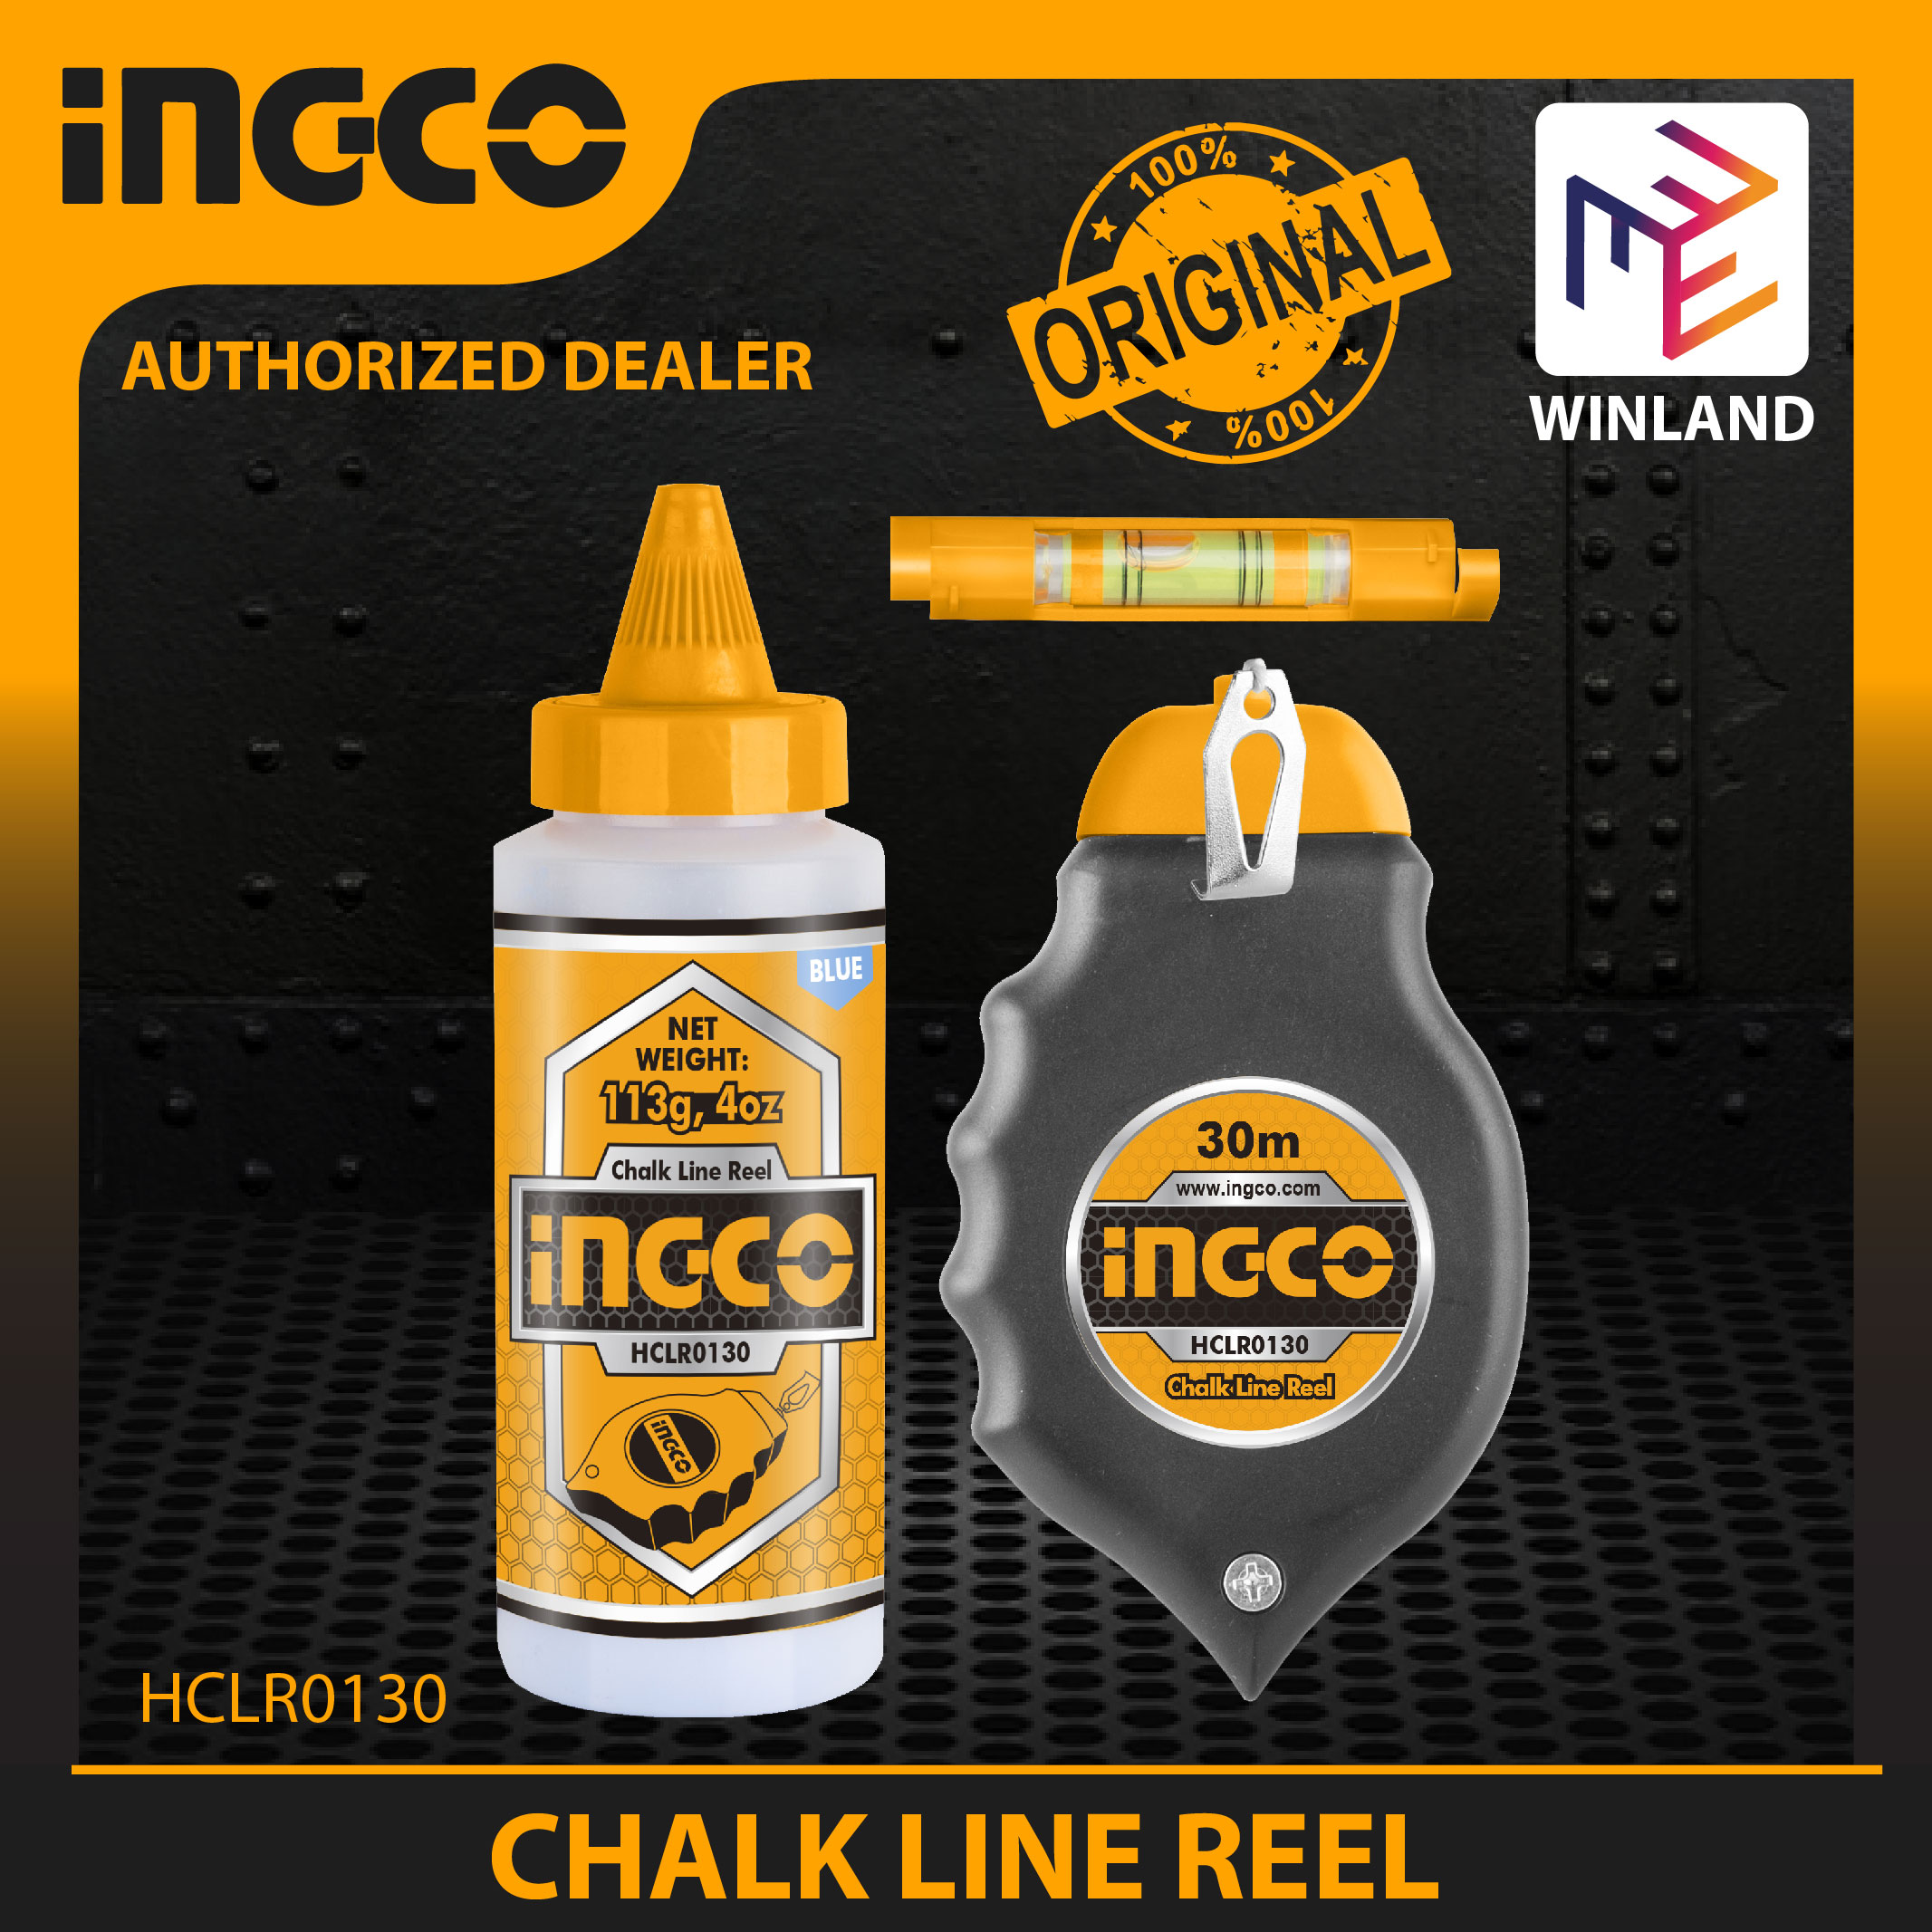 Ingco by Winland Chalk Line Reel 30M HCLR0130 ING-HT